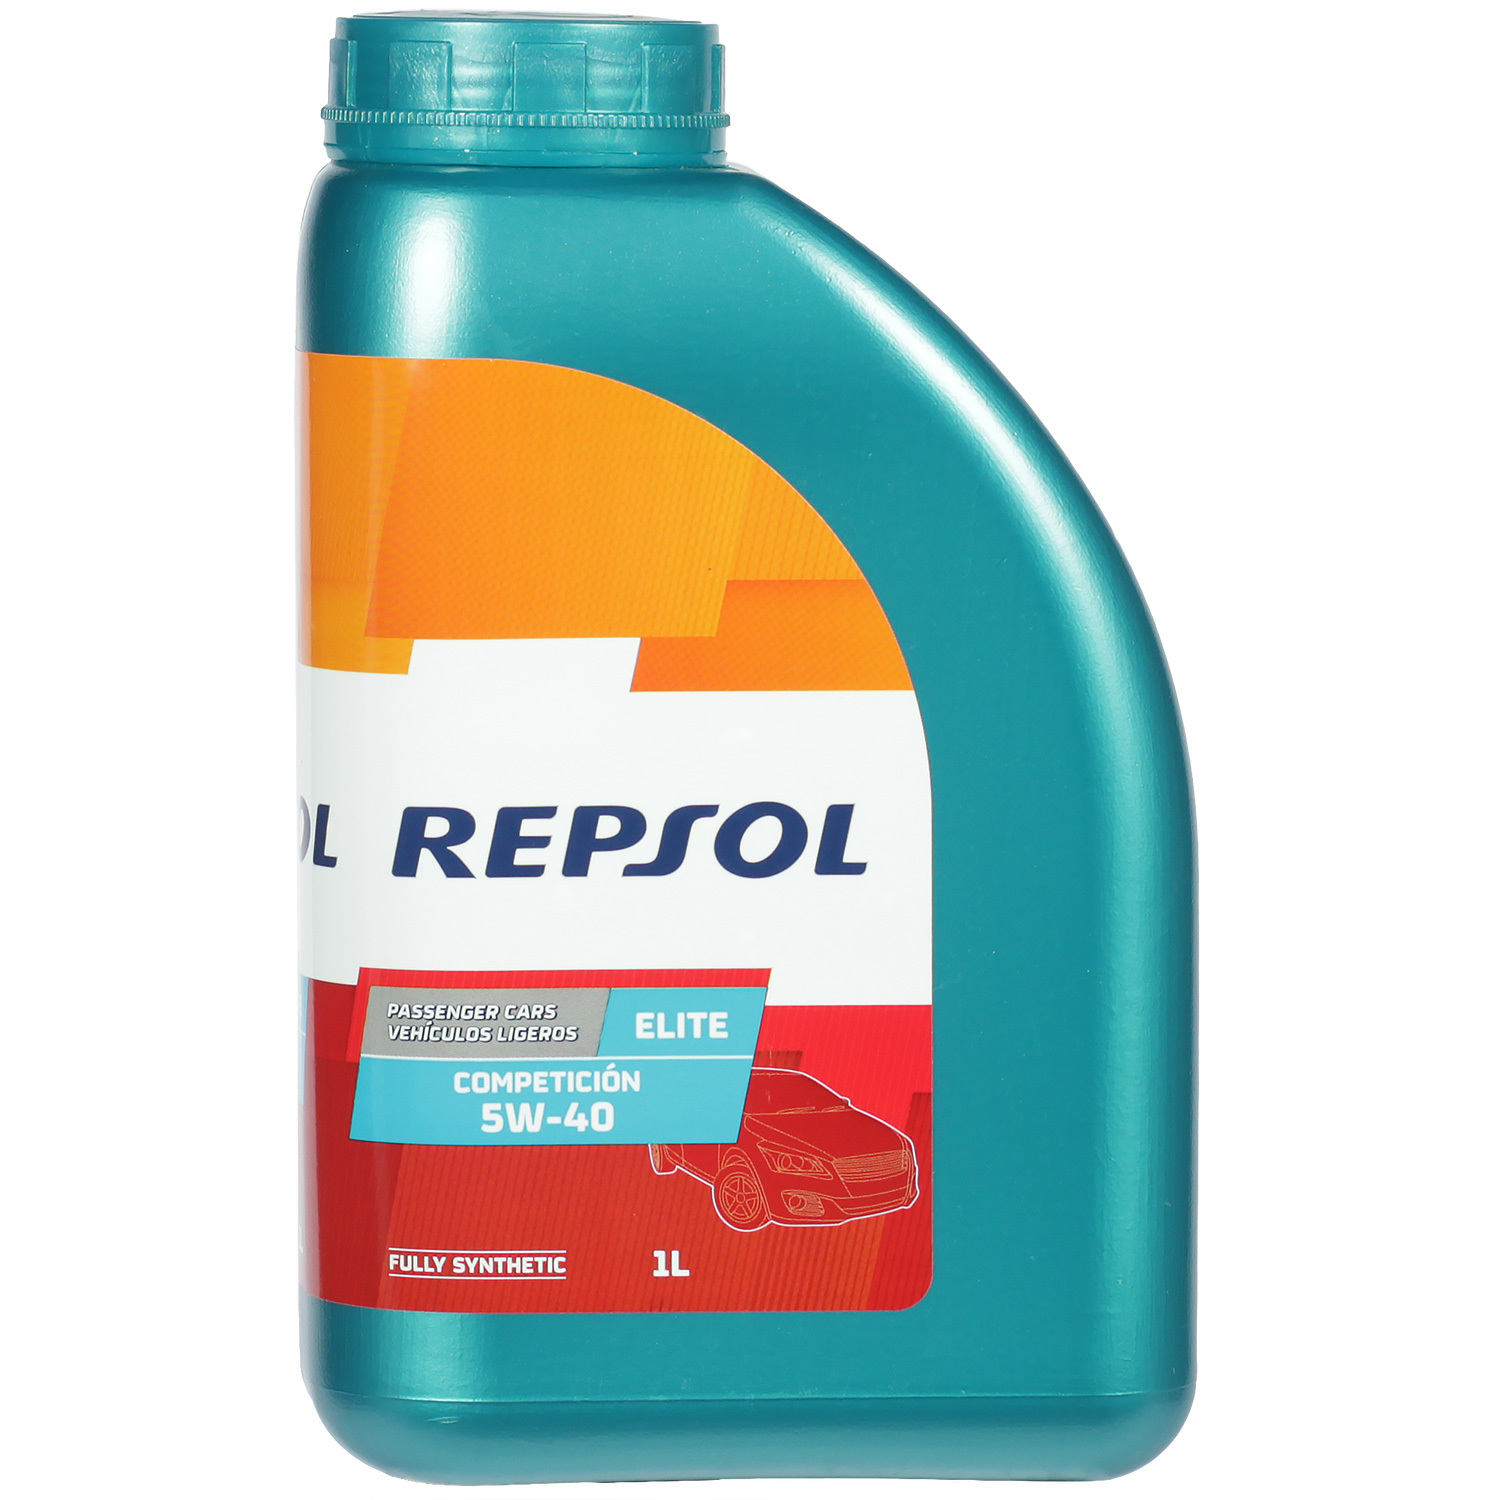 Repsol Моторное масло Repsol Elite COMPETICION 5W-40, 1 л repsol моторное масло repsol elite evolution long life 5w 30 4 л